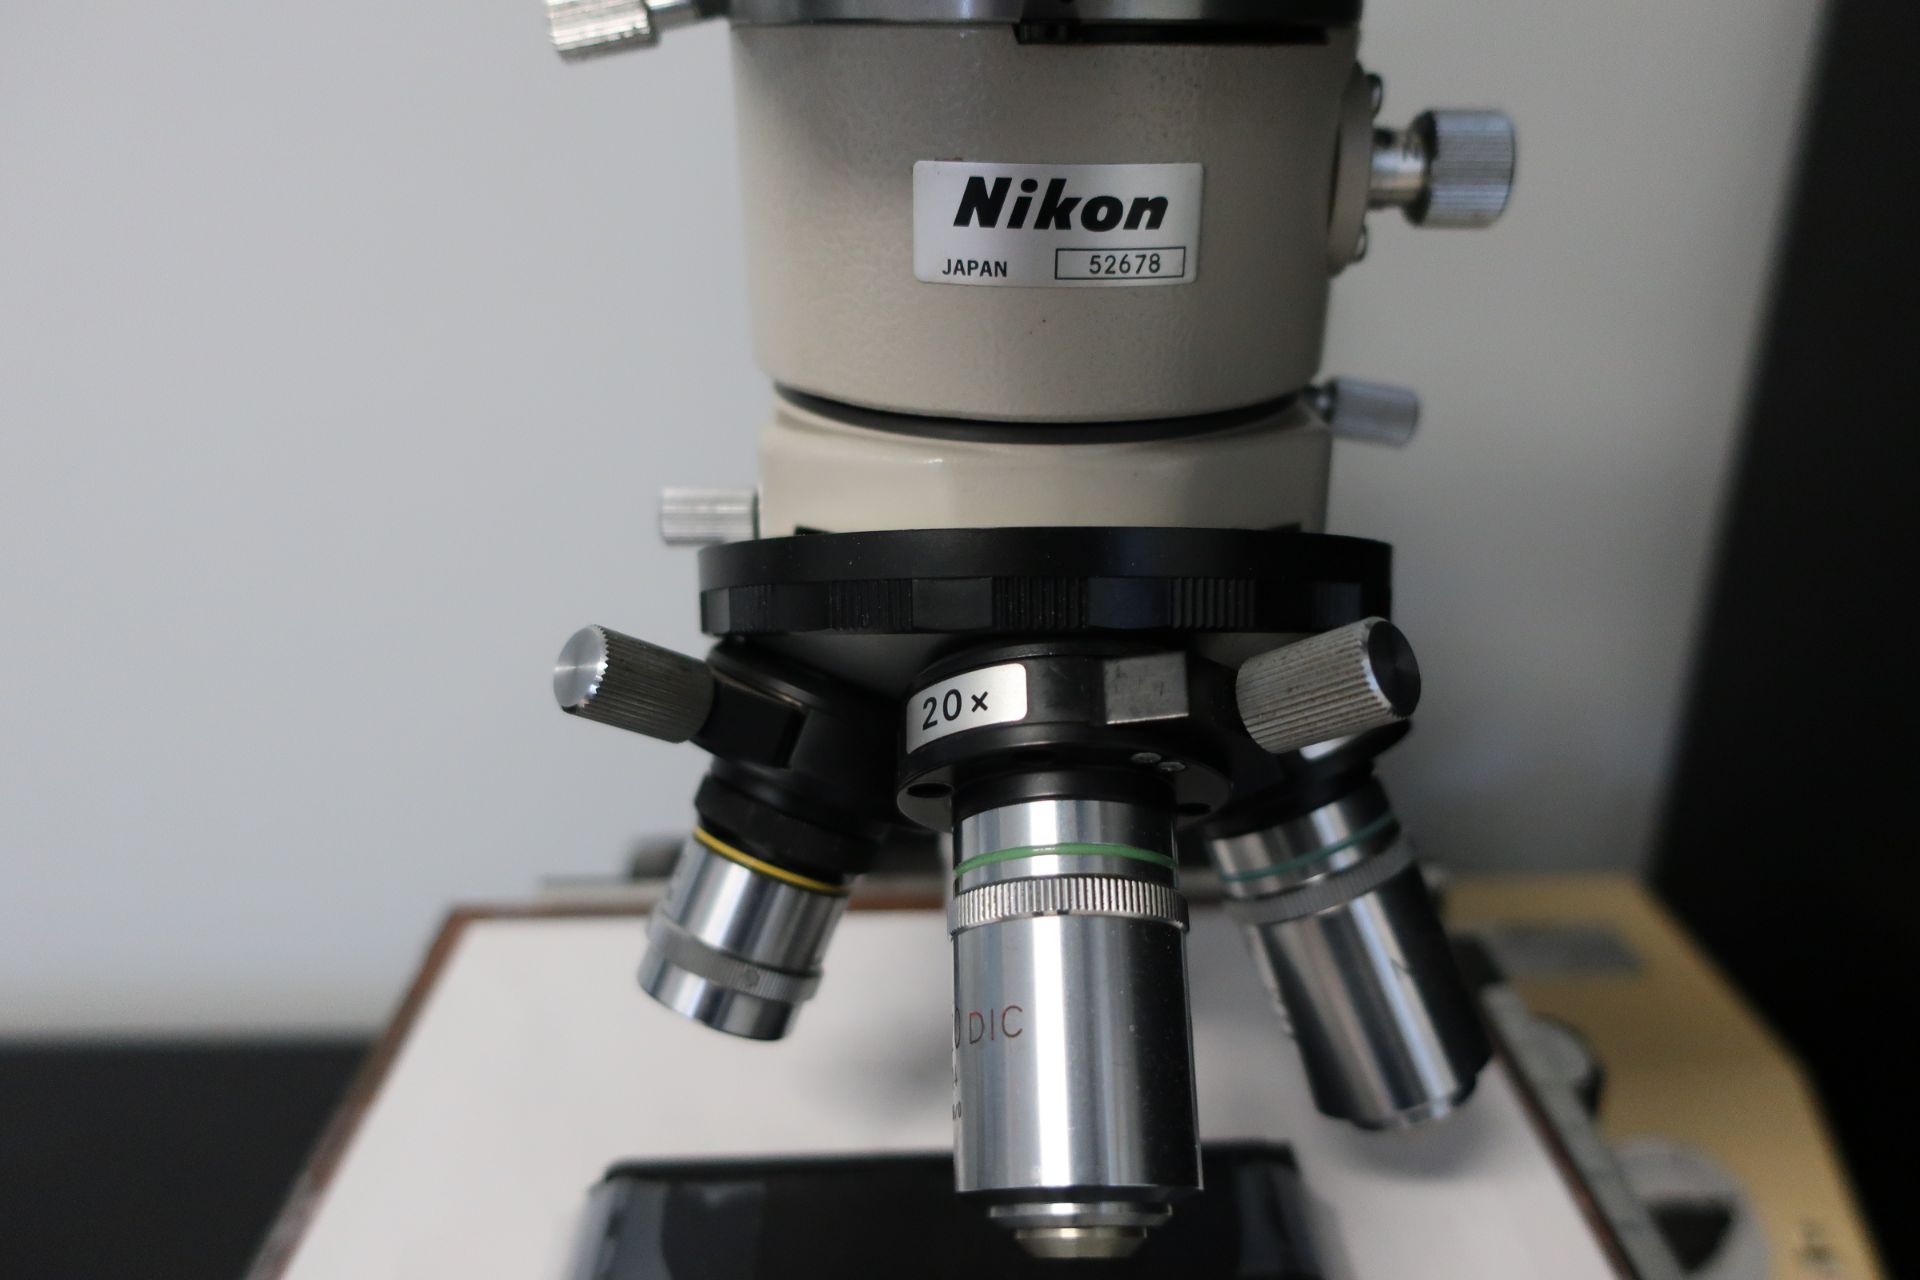 Nikon Optiphot Microscope with (4) Lenses, SN 52678 - Image 3 of 5